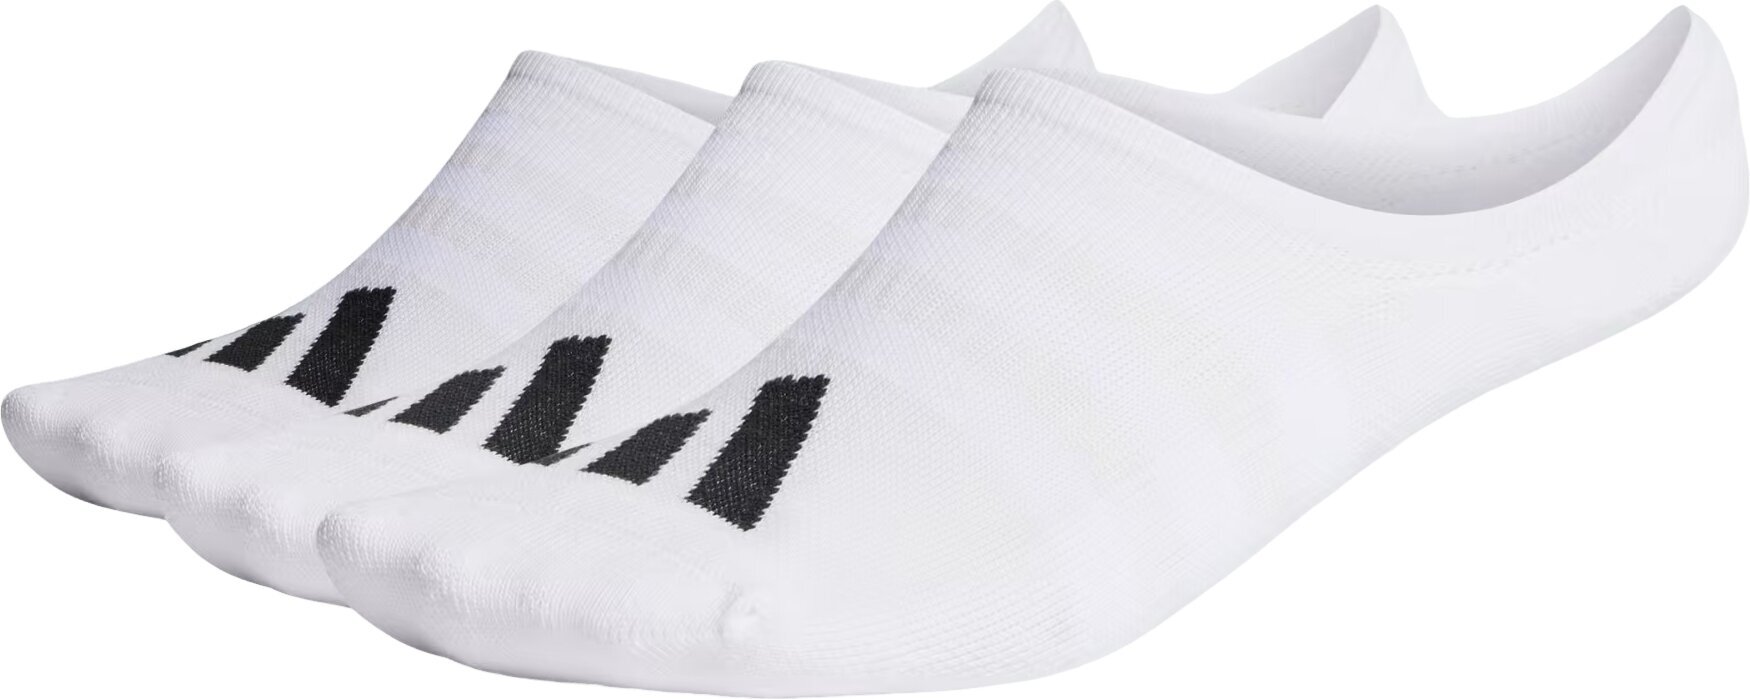 Čarapa Adidas No Show Golf Socks 3-Pairs Čarapa White 48-51